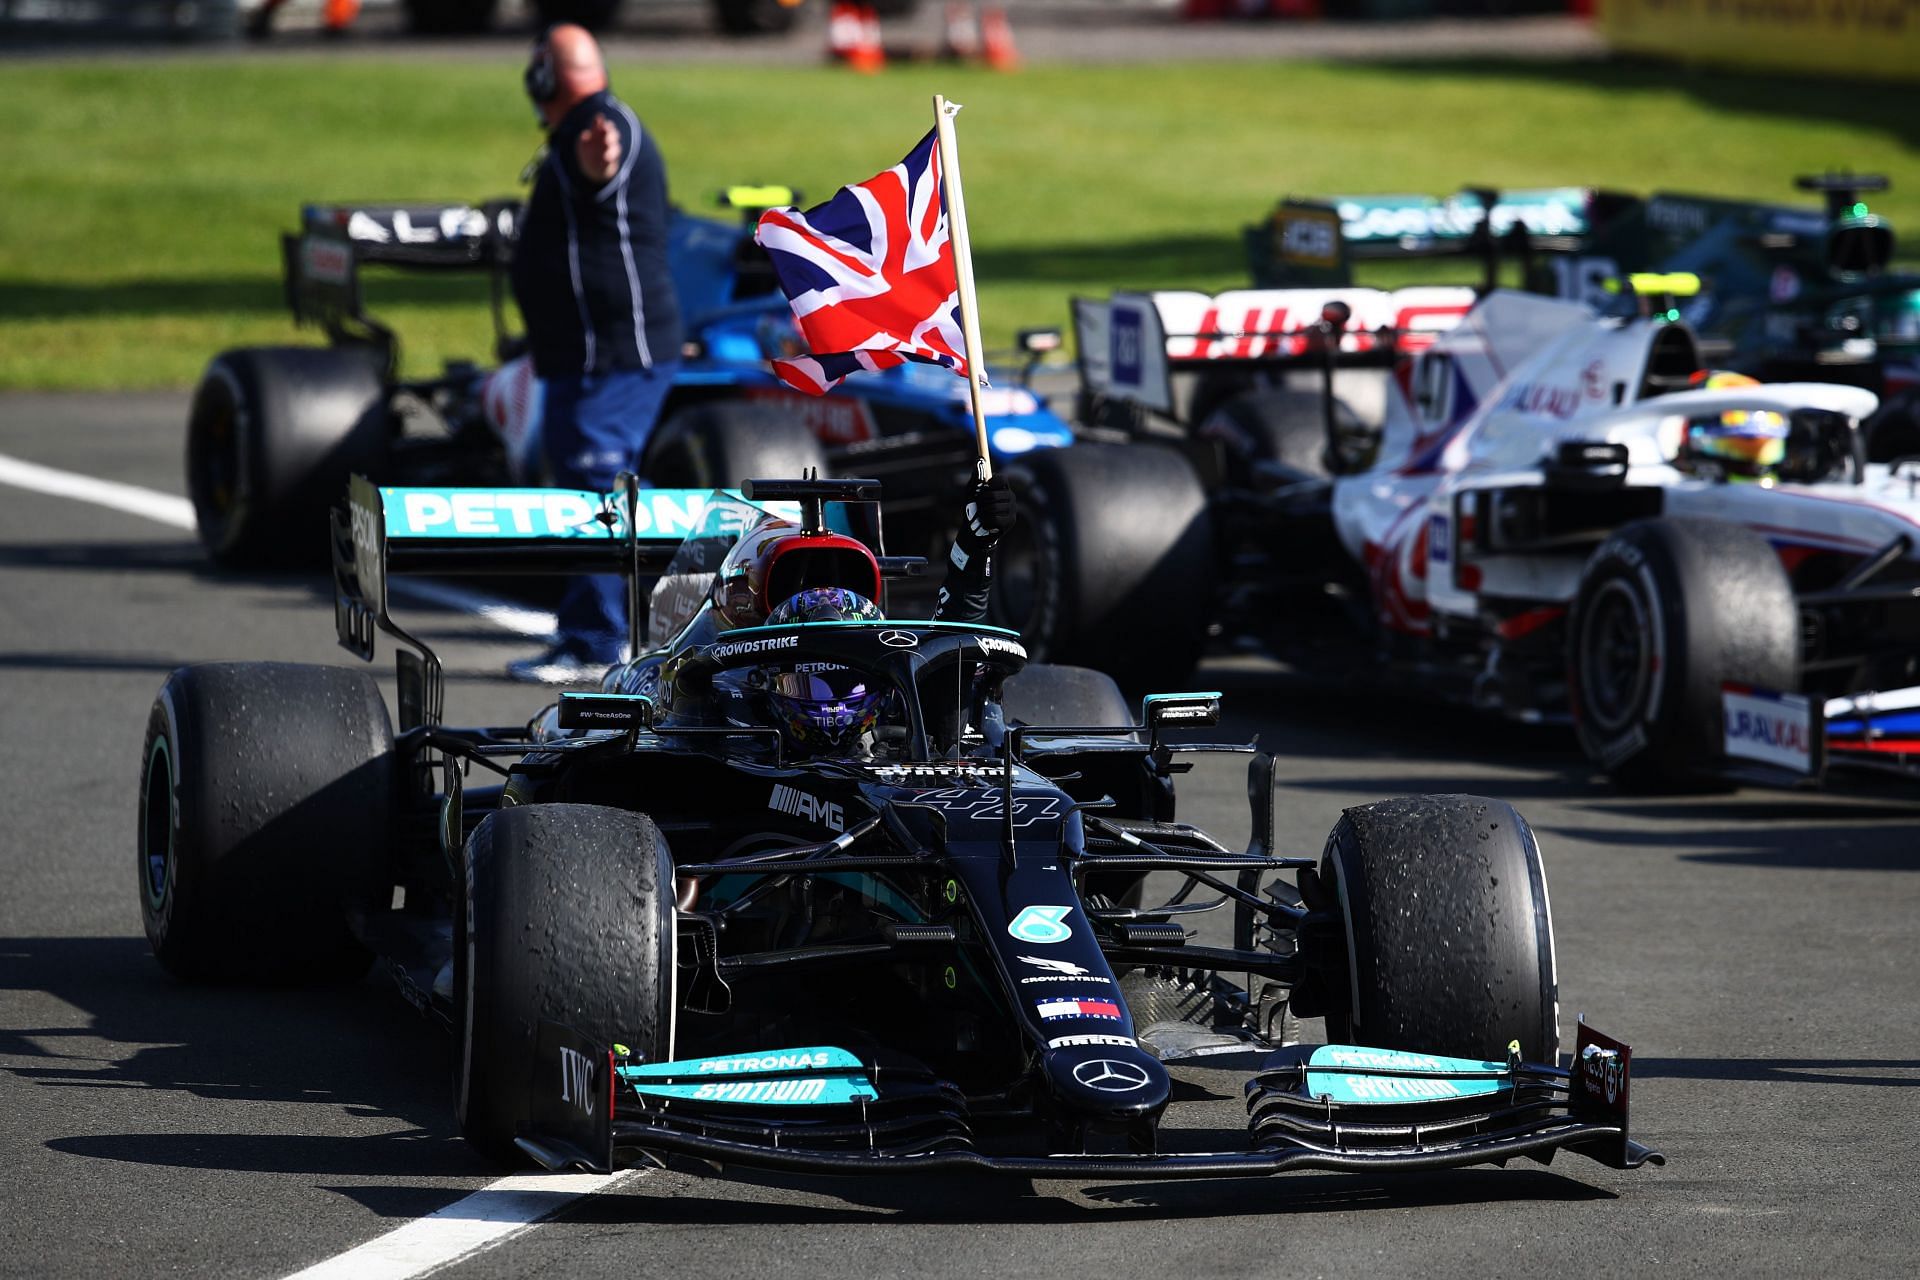 F1 Grand Prix of Great Britain - Lewis Hamilton